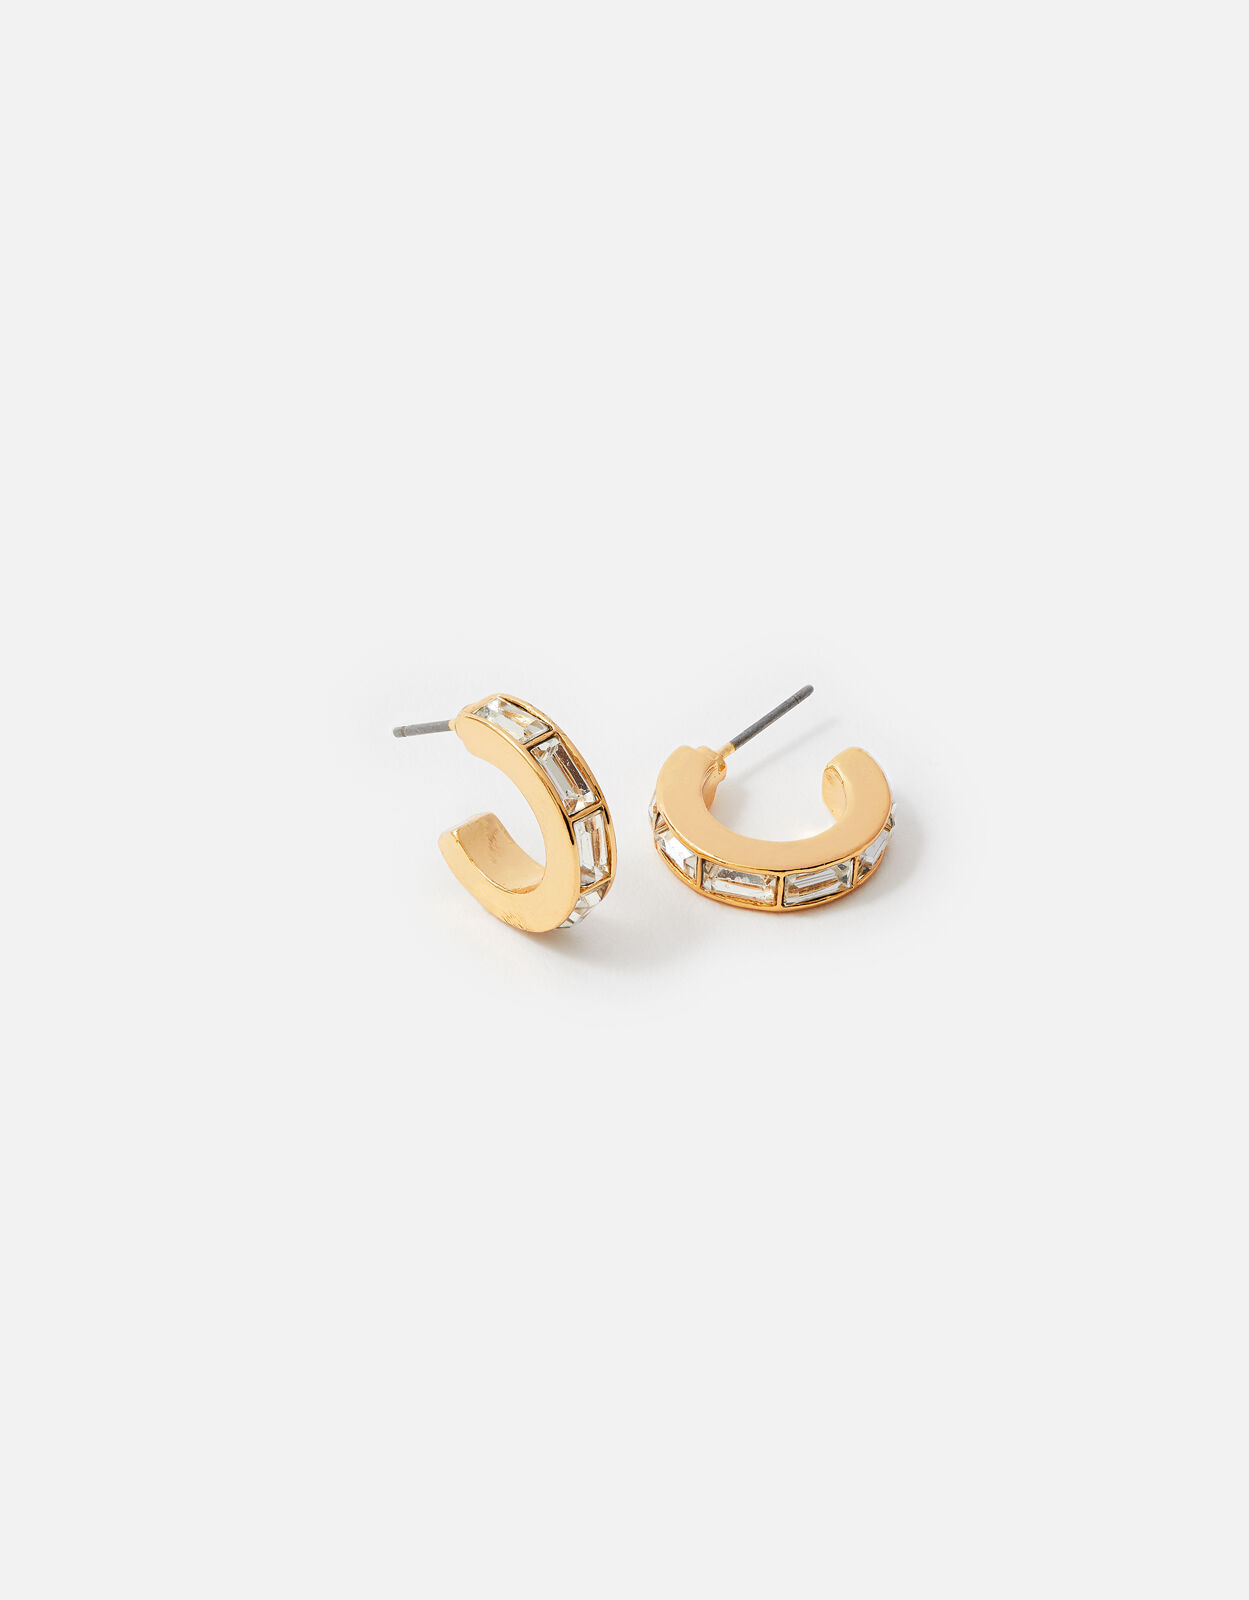 RVS gold Donna Accessori Gioielli Set gioielli 3,5 cm earing hoops met patroontje 